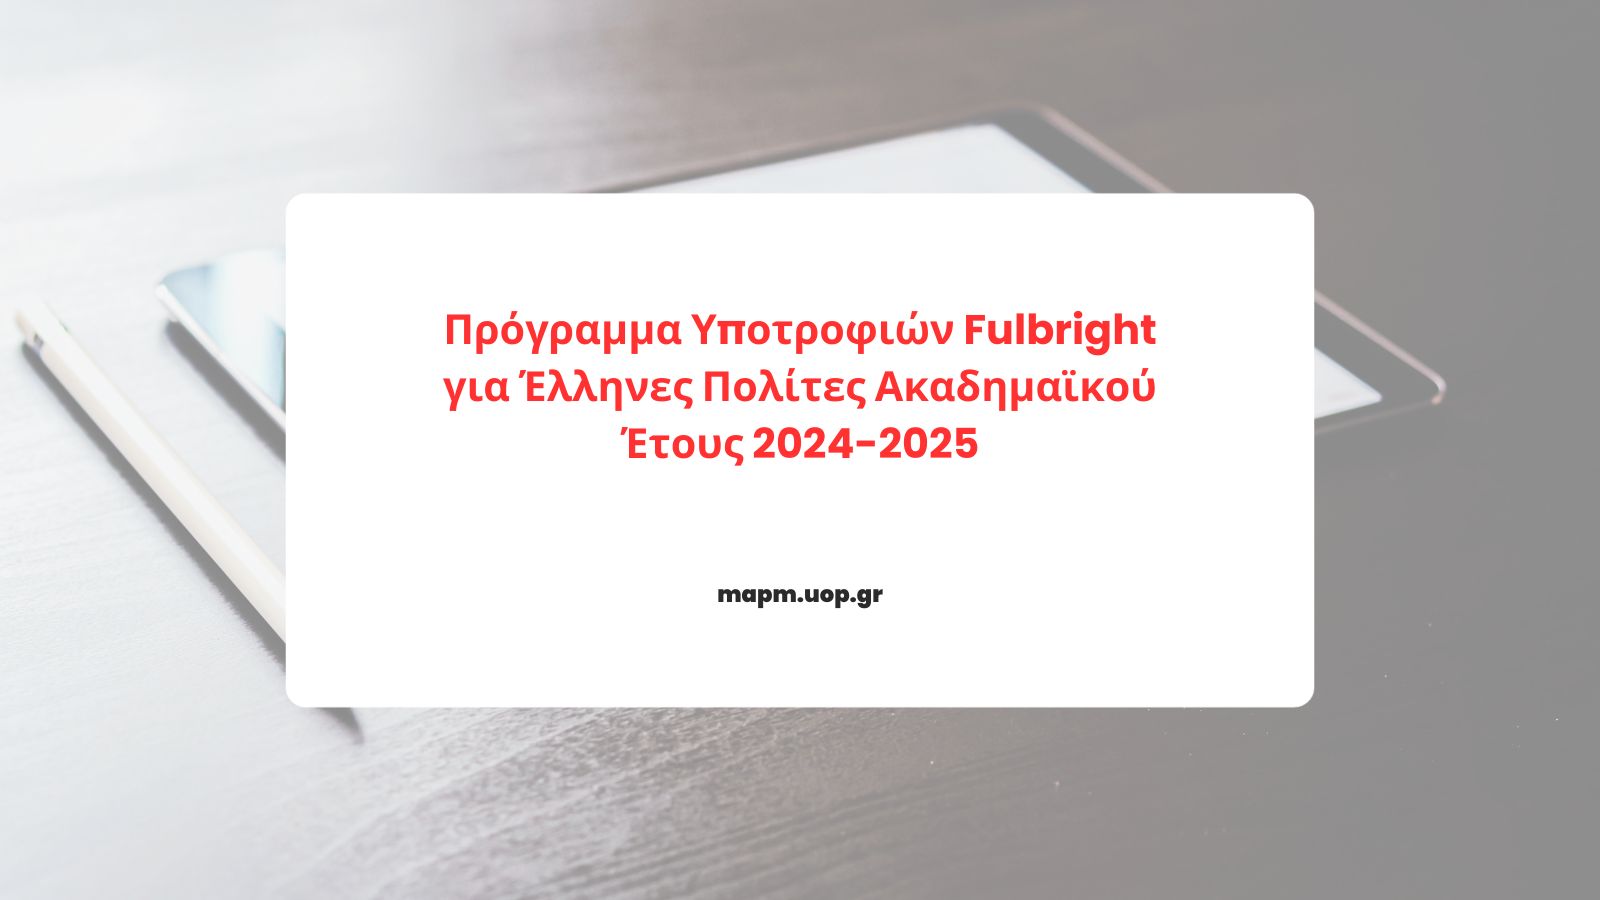 You are currently viewing Πρόγραμμα Υποτροφιών Fulbright για Έλληνες Πολίτες Ακαδημαϊκού Έτους 2024-2025